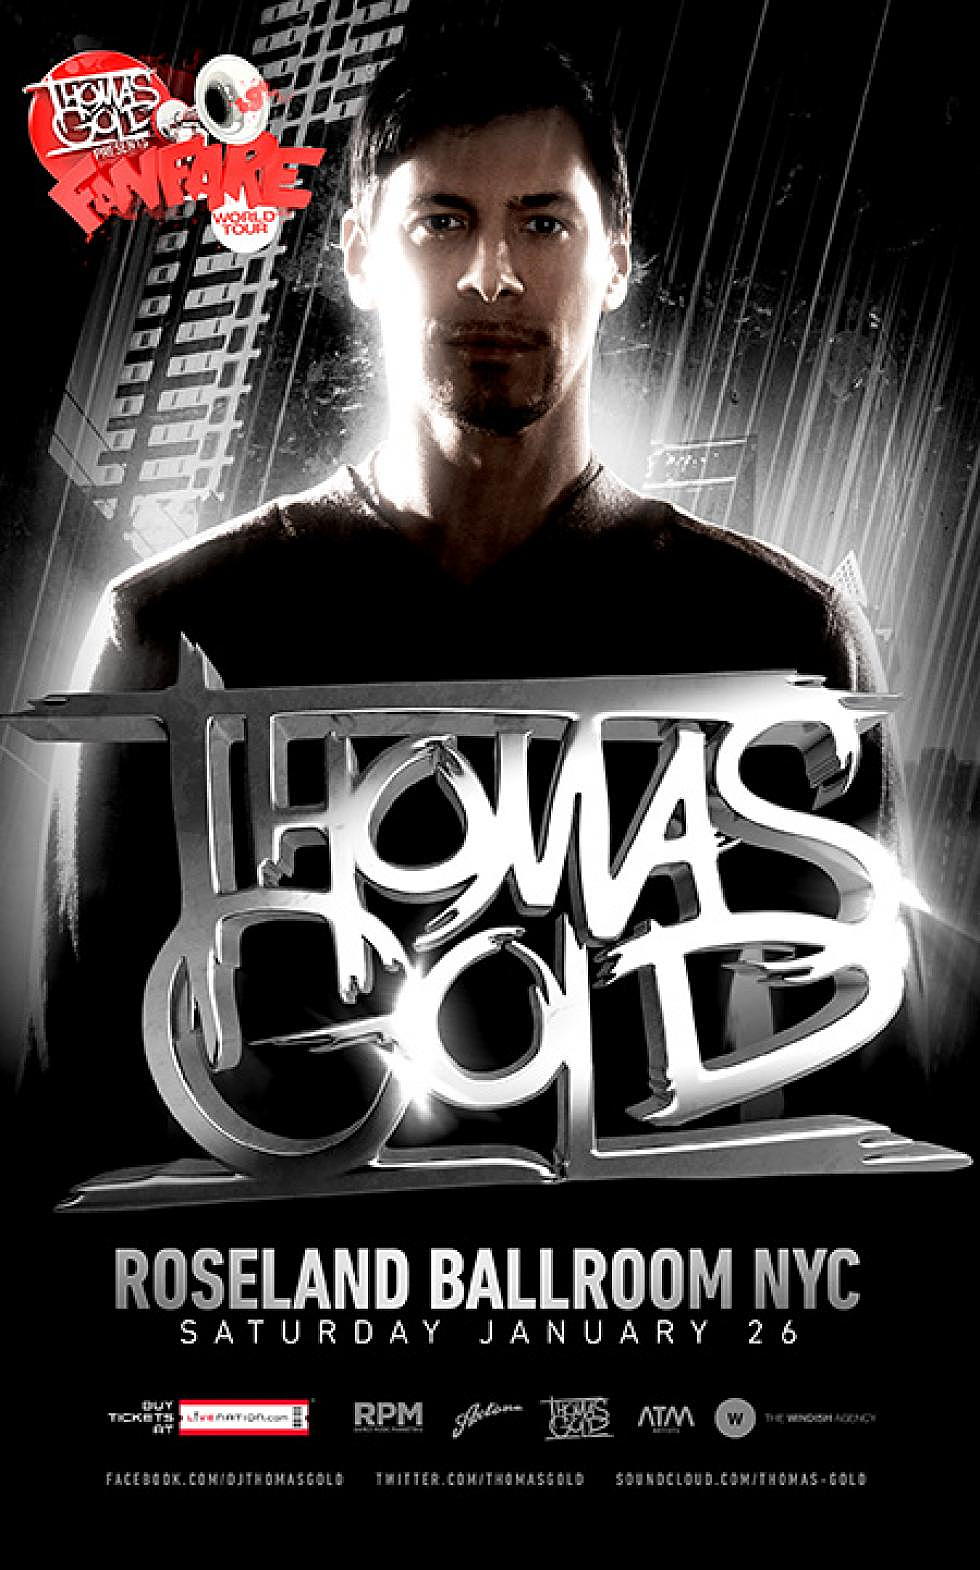 JUST ANNOUNCED: Thomas Gold at Roseland Ballroom January 26th